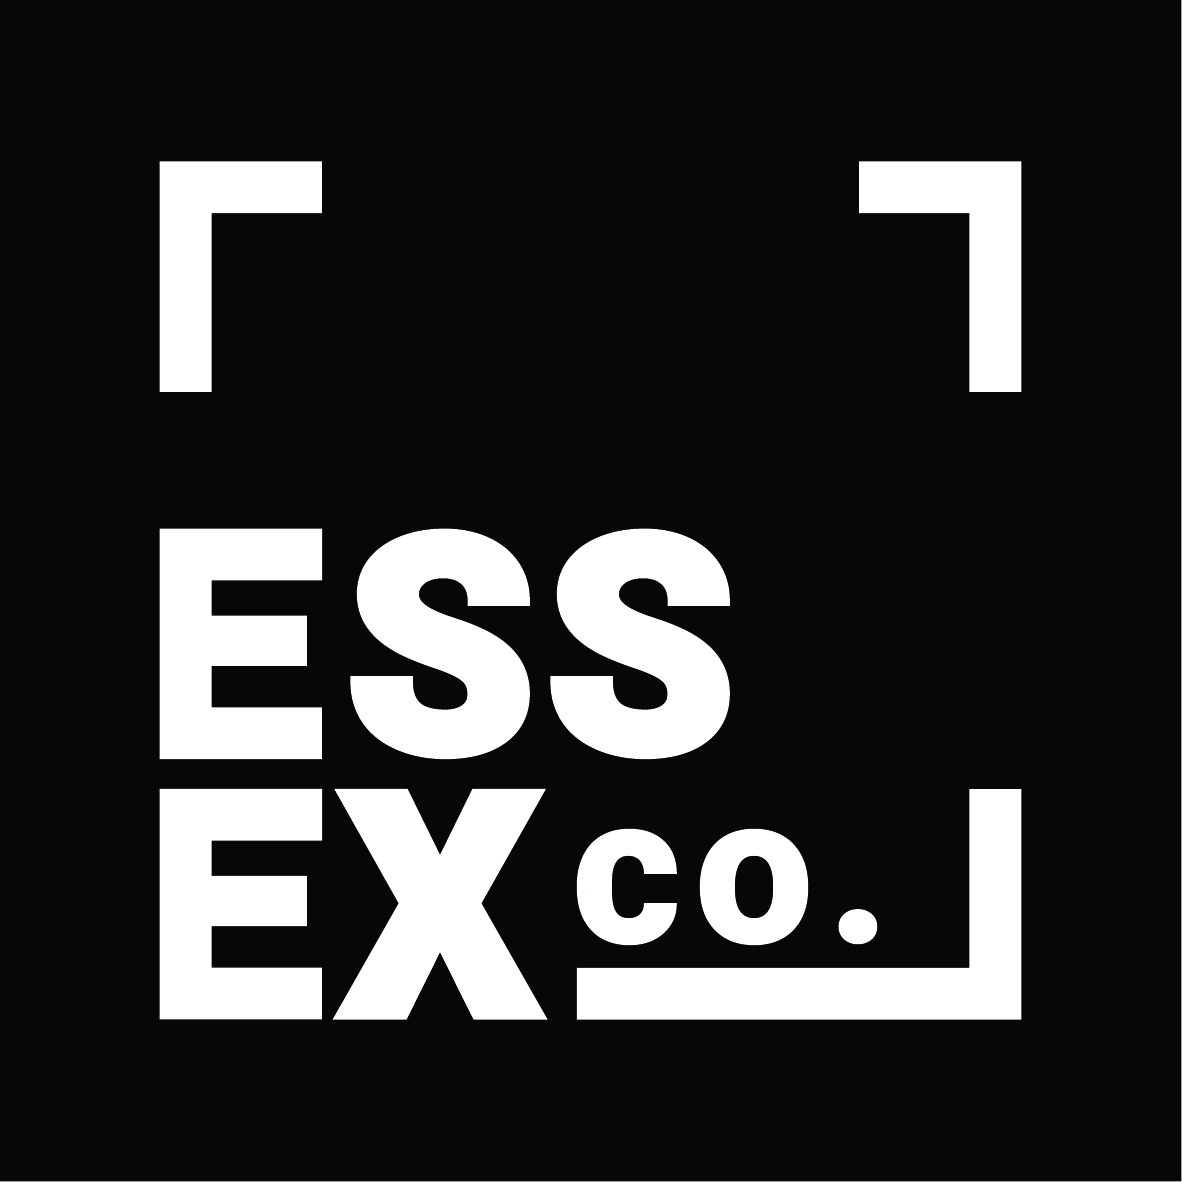 Essex Co